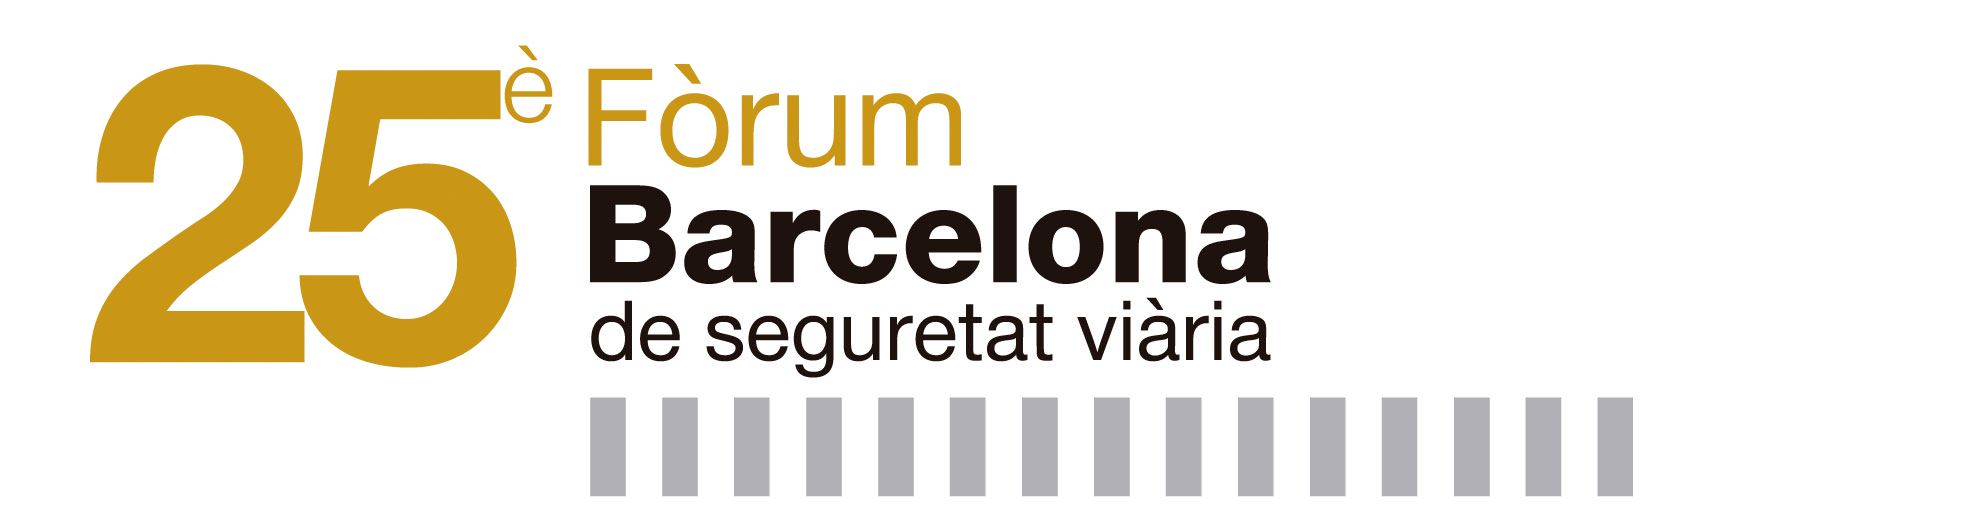 25è Fòrum Barcelona de seguretat viària